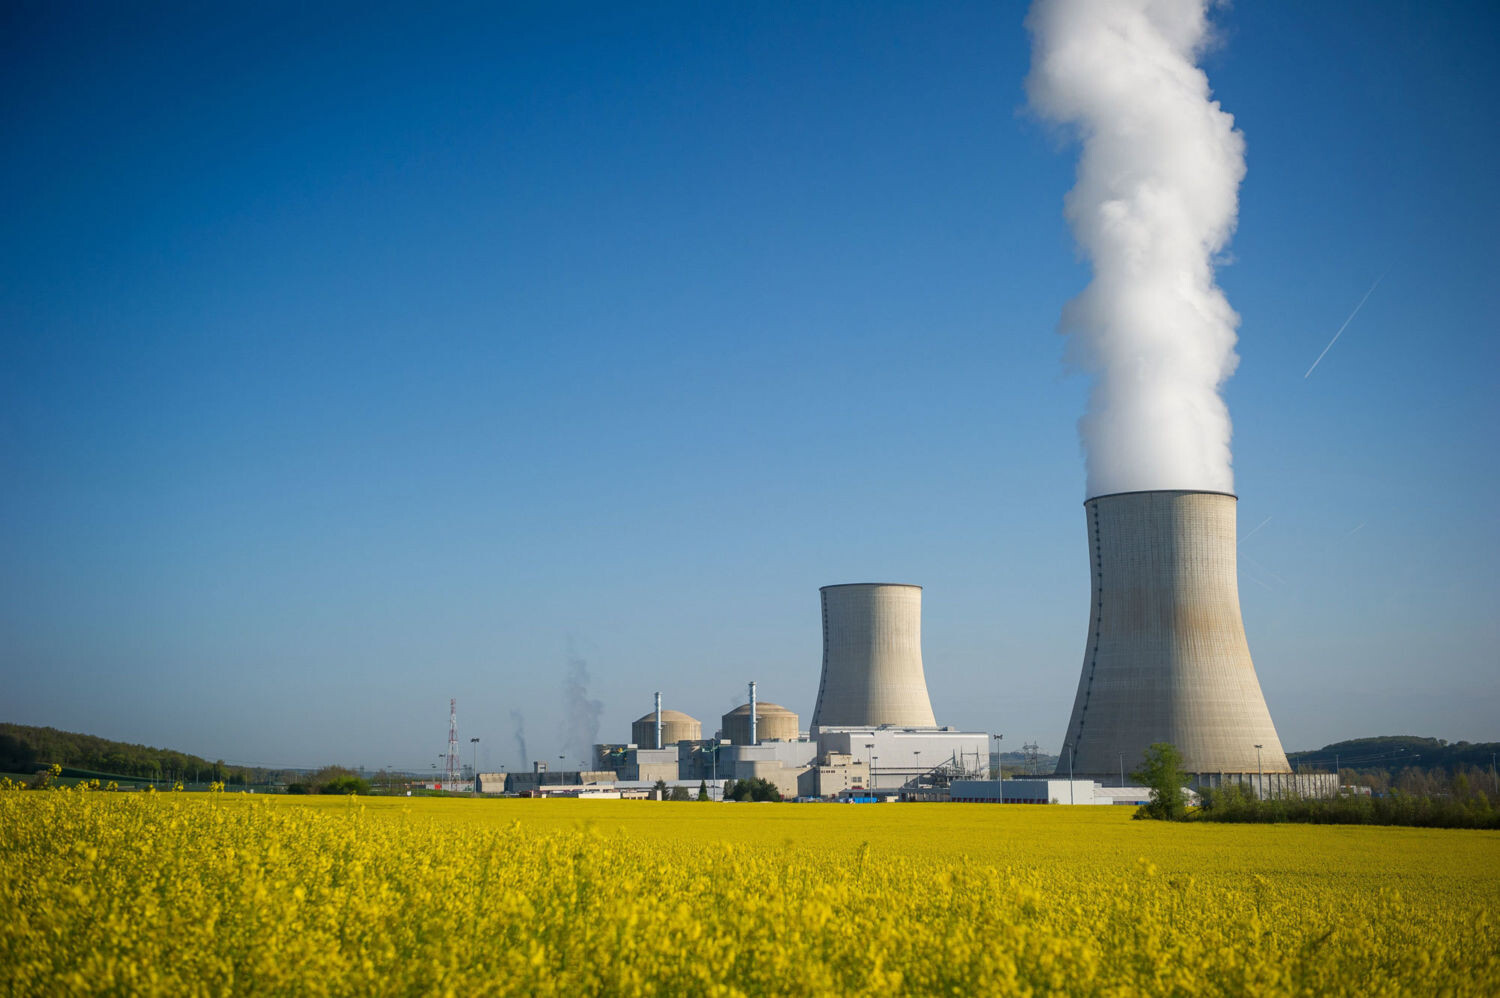 More information about "ΕΕ: Οι επενδύσεις σε φυσικό αέριο και πυρηνική ενέργεια χαρακτηρίζονται «πράσινες» υπό αυστηρές προϋποθέσεις"